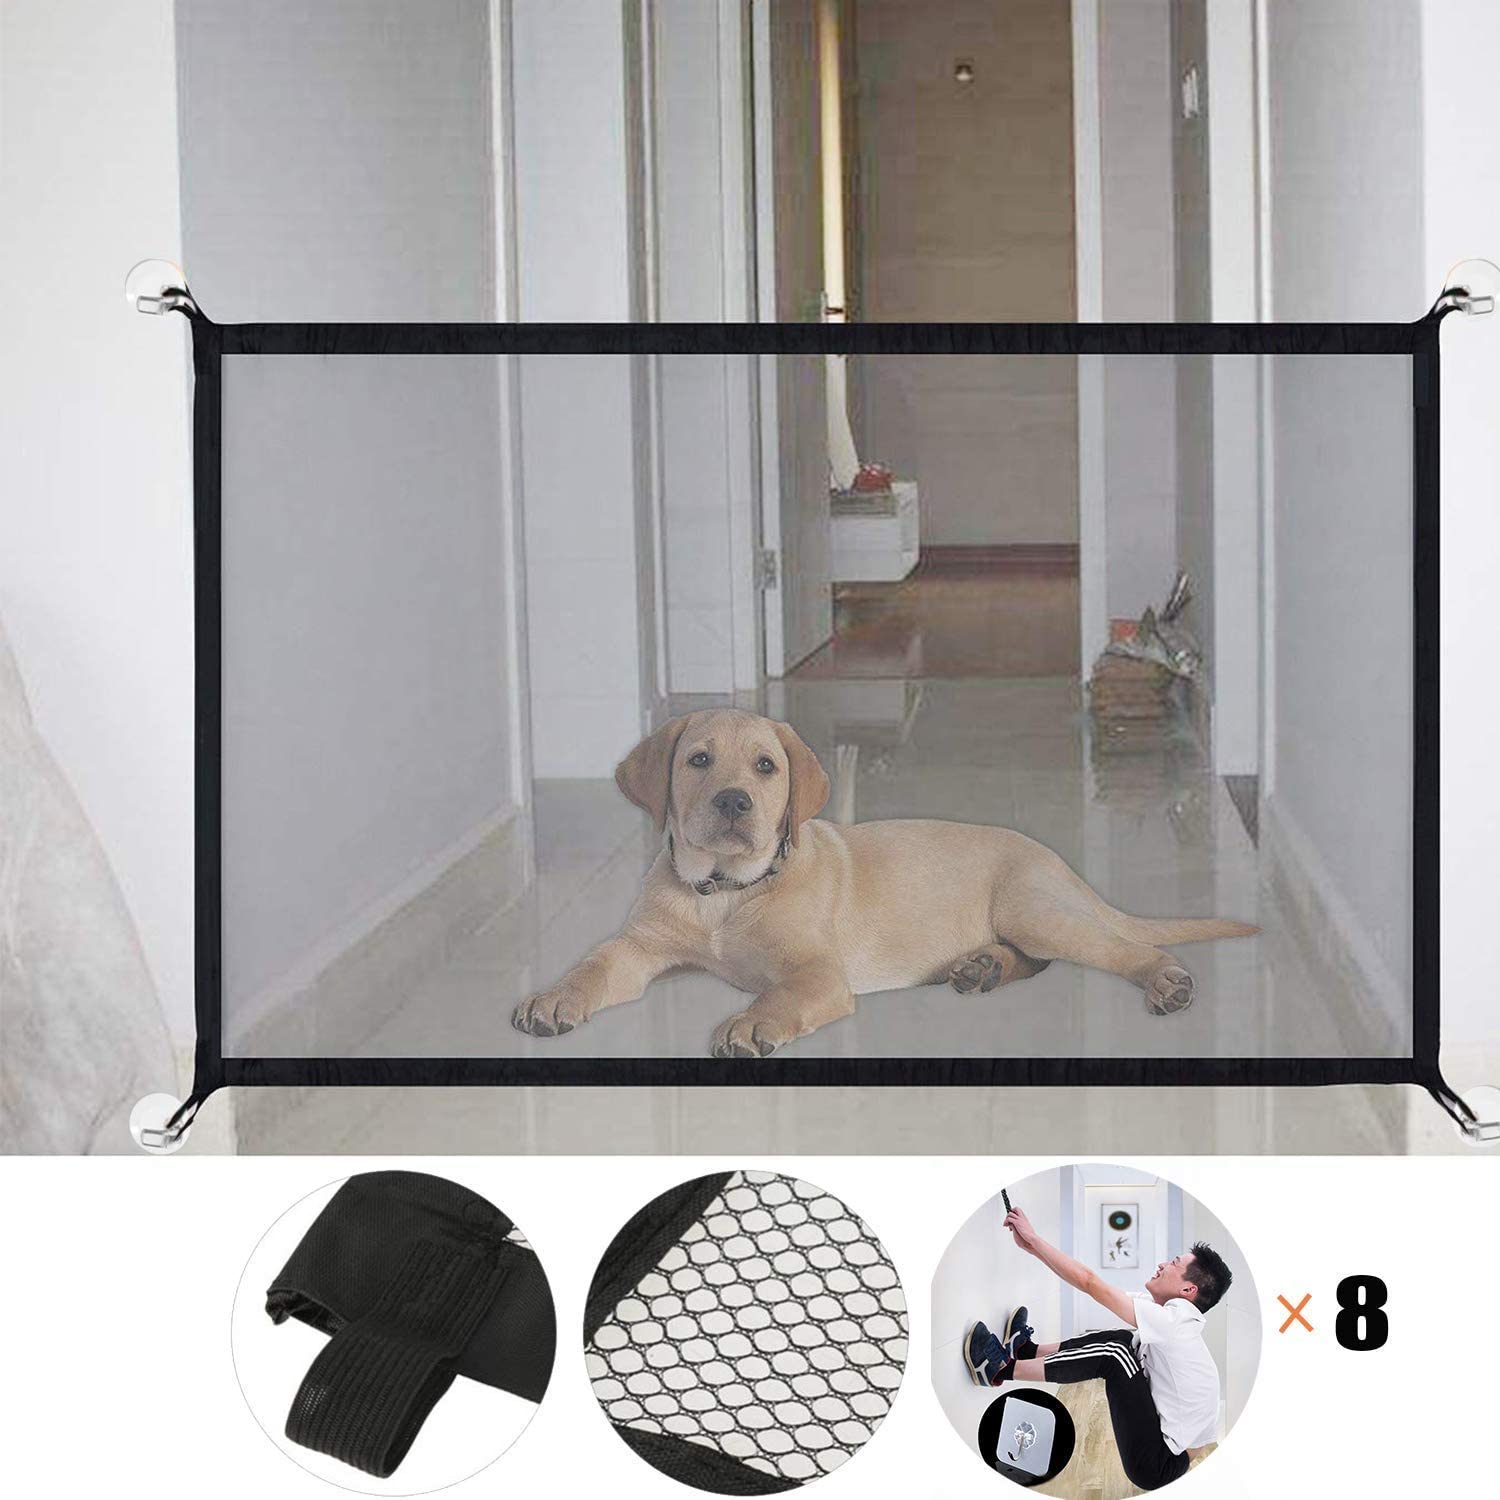  Magic Pet Safety Gate Barrera de Seguridad para Mascotas Portátil y plegable Safe Guard Cerramiento de seguridad para mascotas Dog Cat Fences (Negro) 